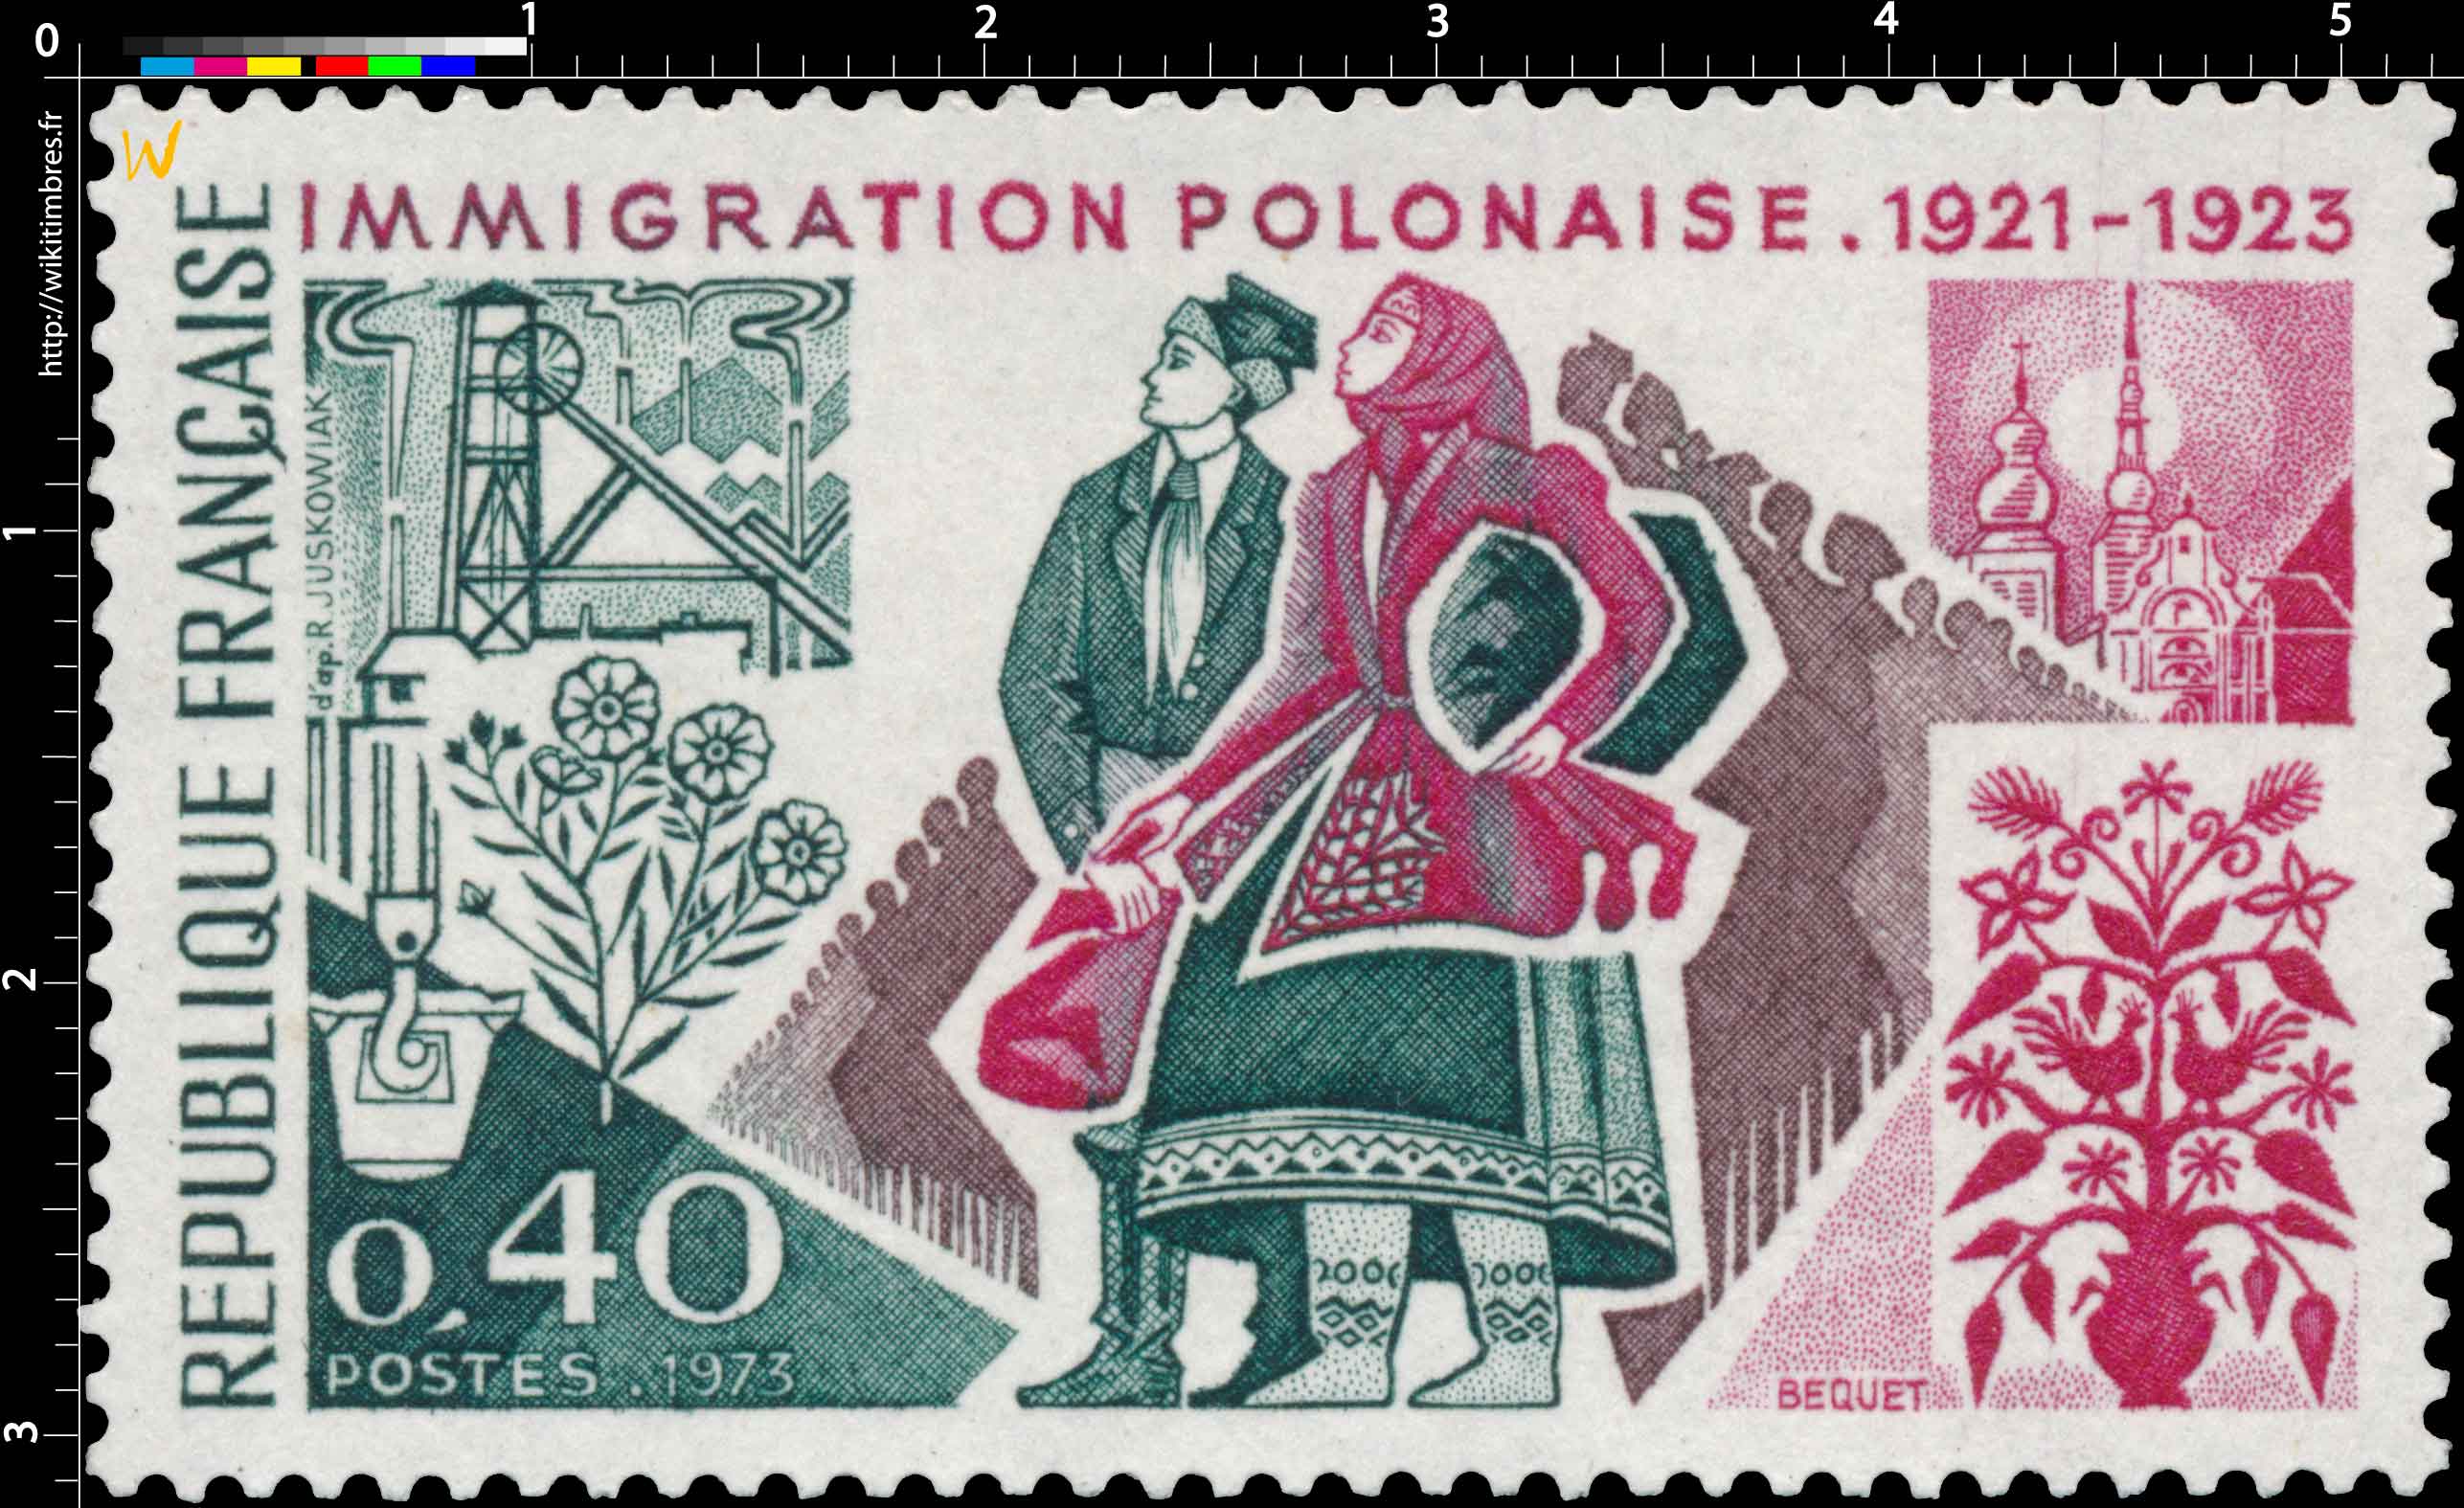 1973 IMMIGRATION POLONAISE. 1921-1923